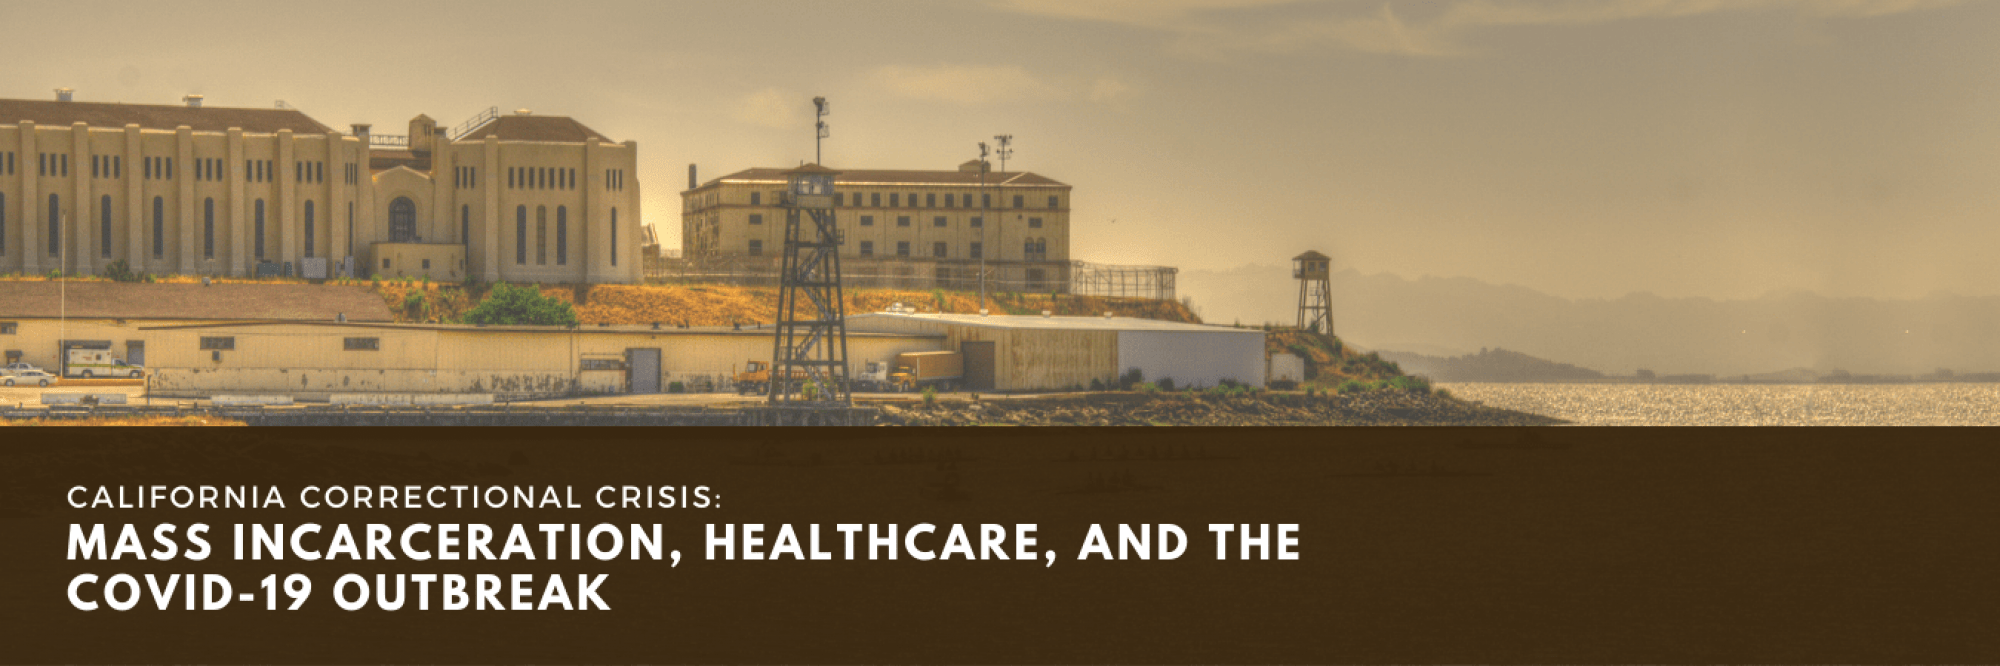 California Correctional Crisis: Mass Incarceration, Healthcare, and the COVID-19 Outbreak